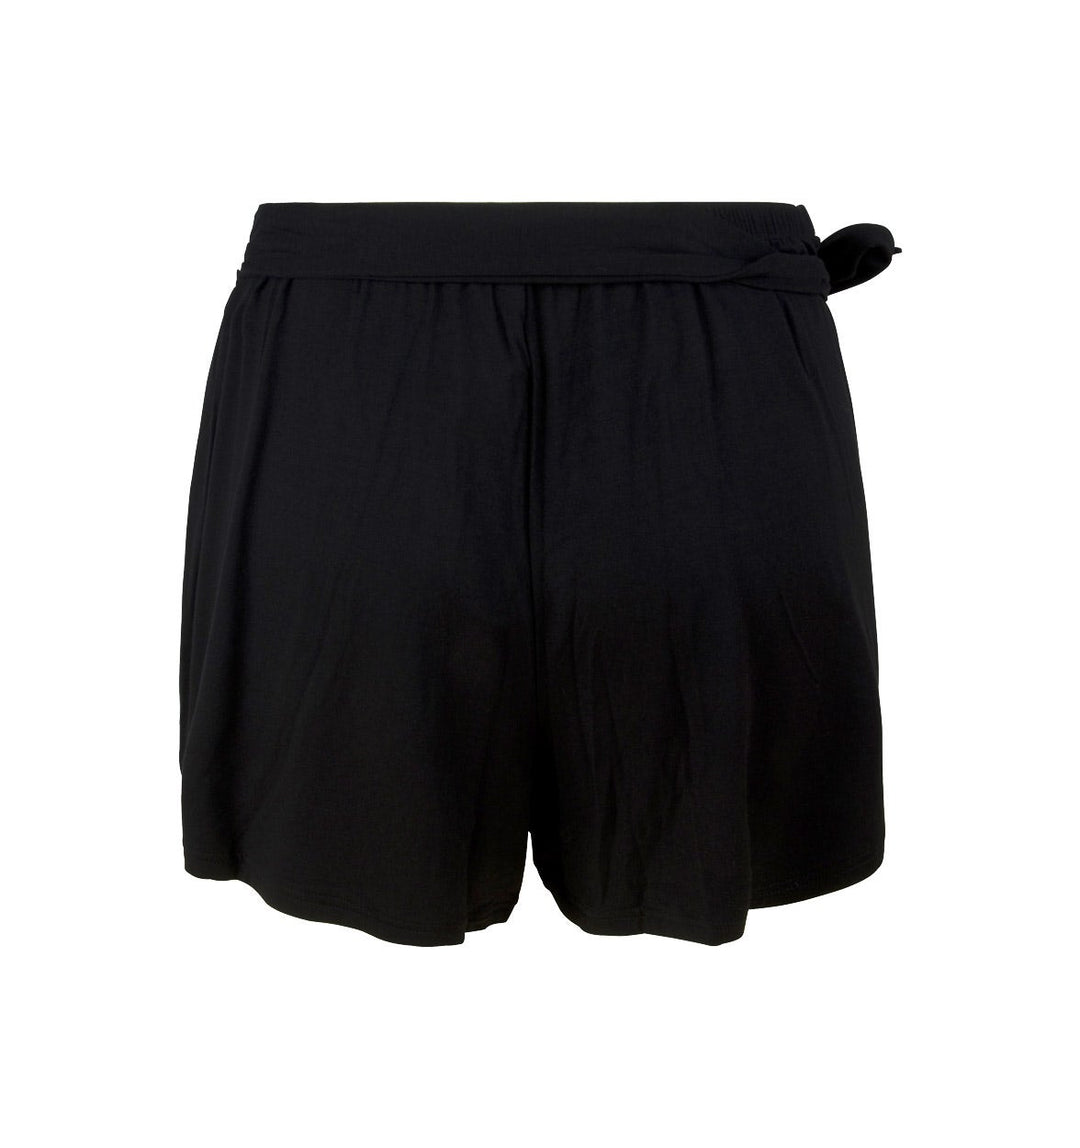 Antigel di Lise Charmel - La Chiquissima Beach Shorts Noir Shorts Antigel di Lise Charmel Costumi da bagno